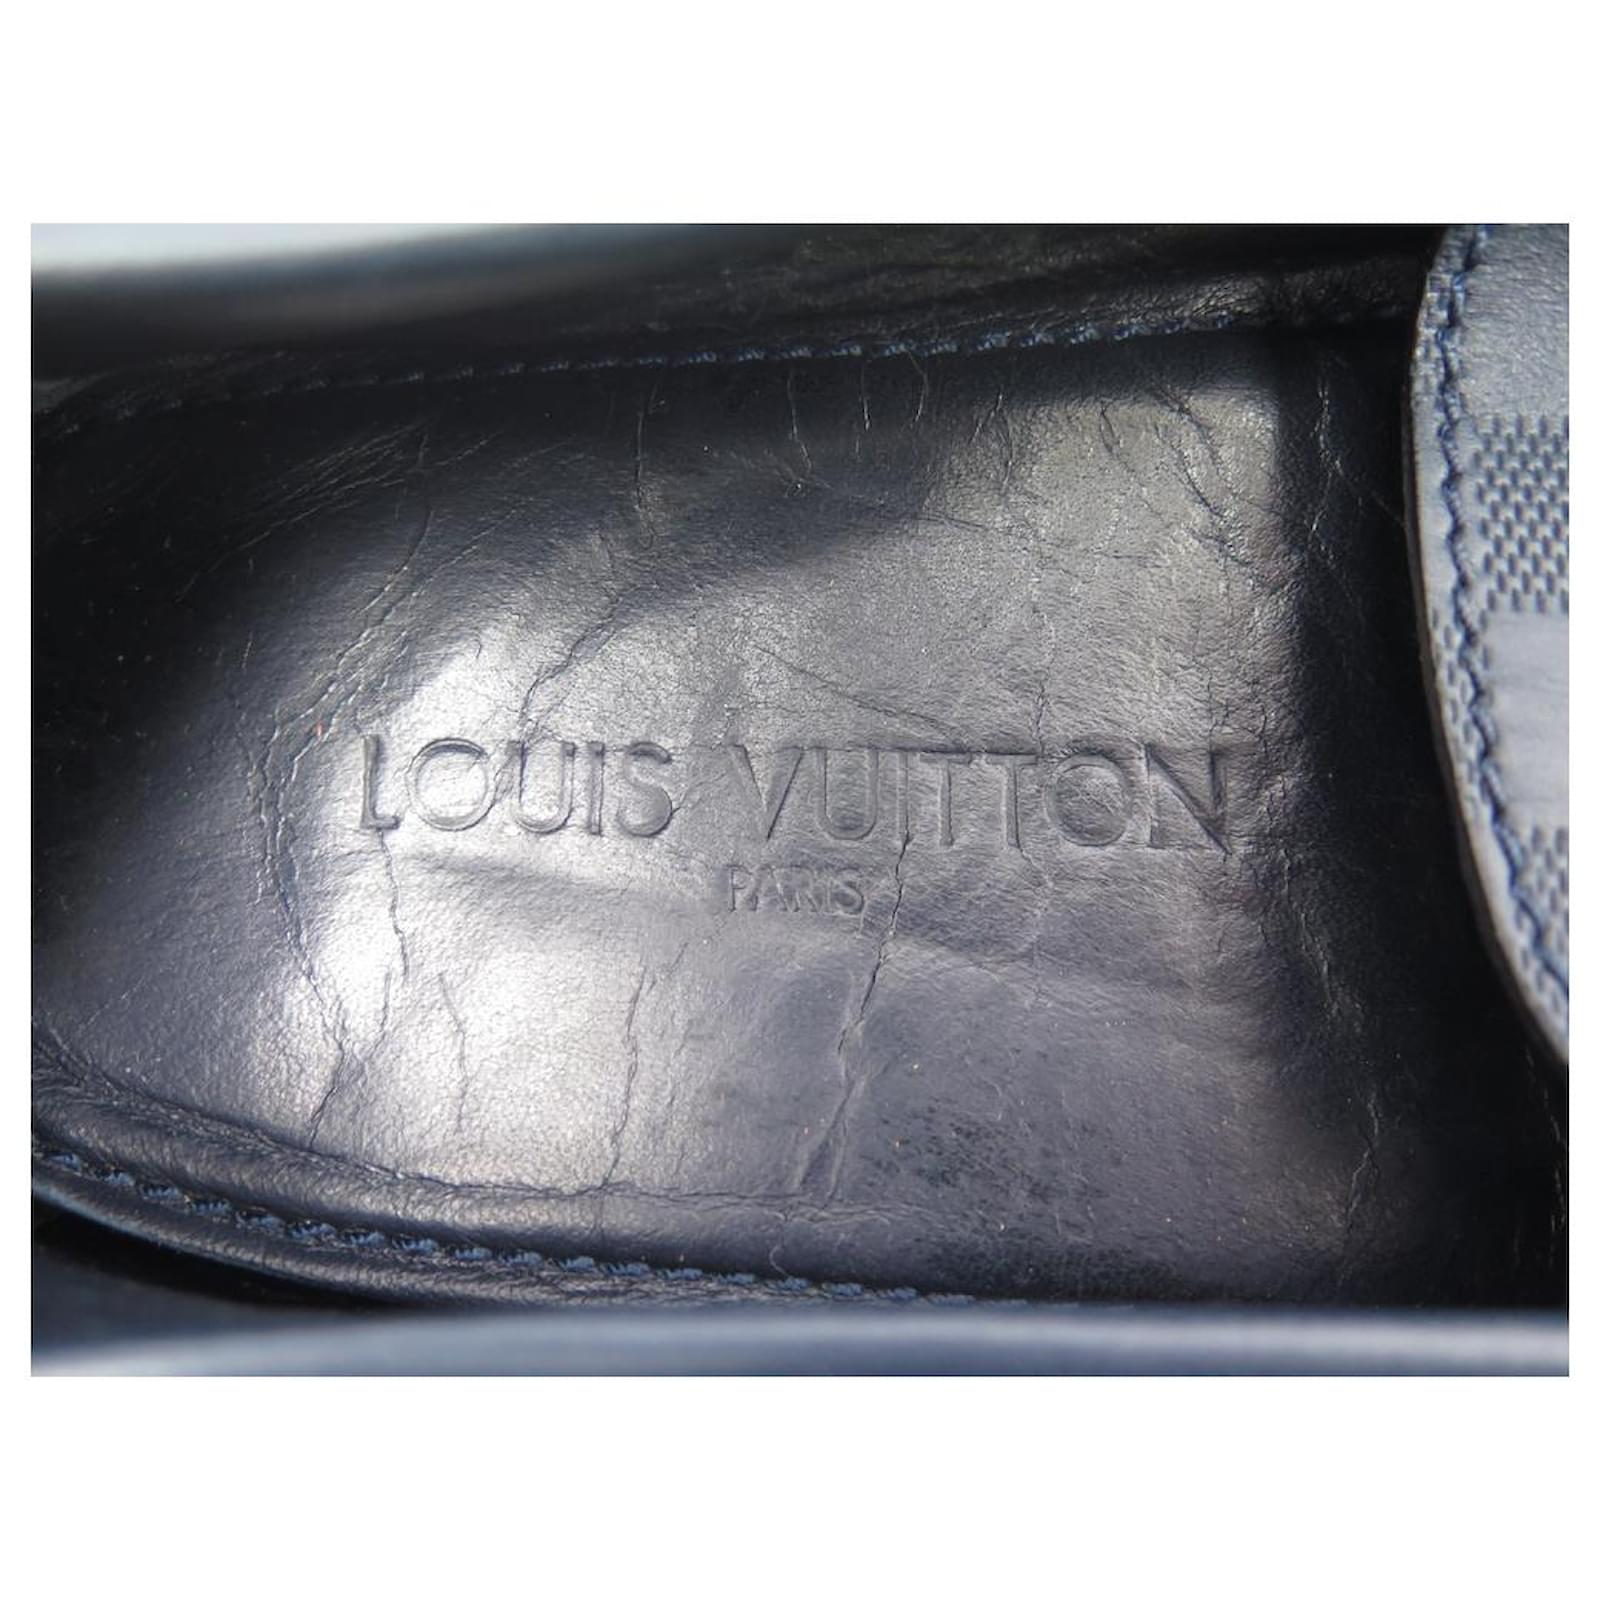 Louis Vuitton Hockenheim Moccasin Mocha. Size 06.5